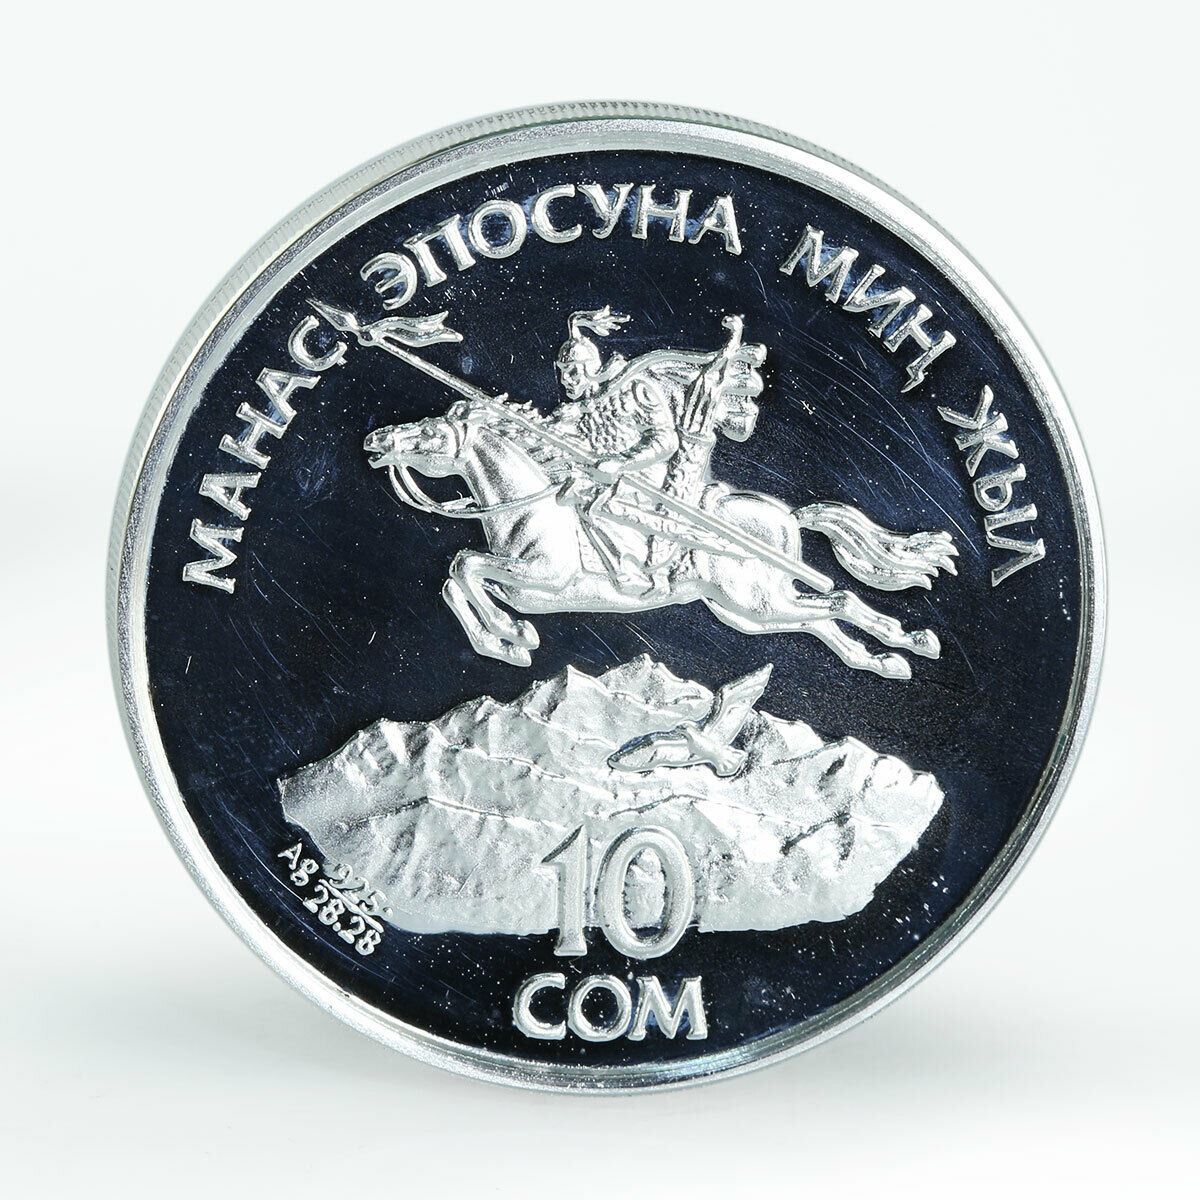 Kyrgyzstan 10 Som Millennium of Manas proof silver coin 1995